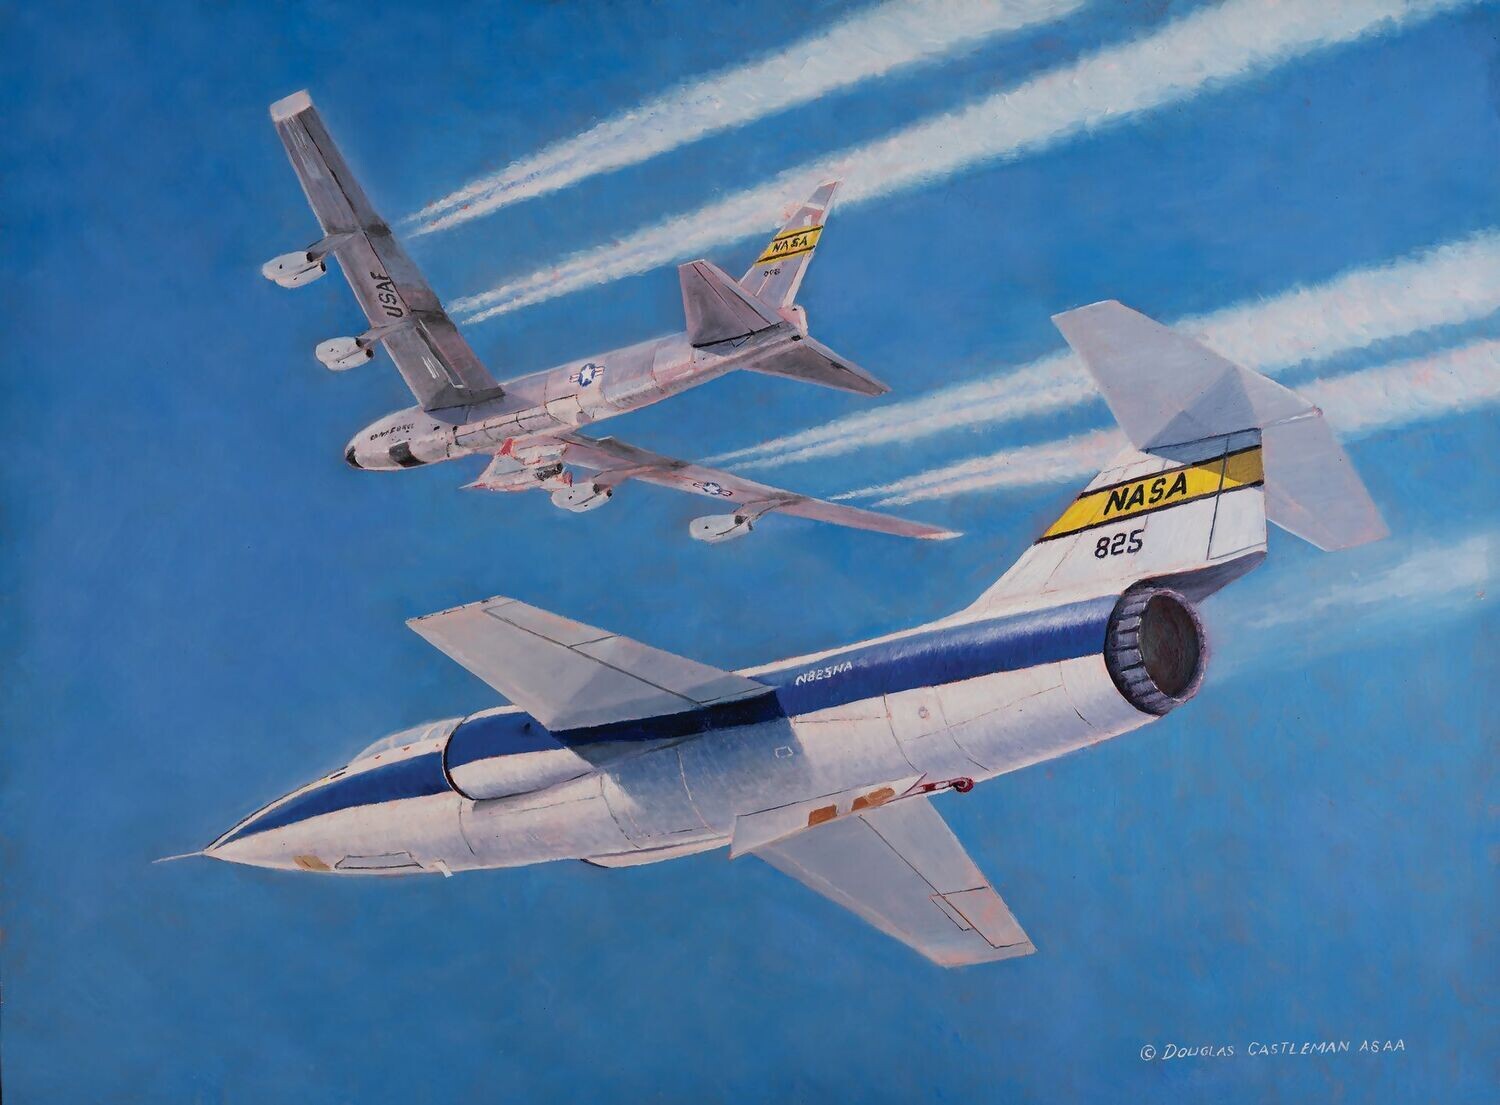 Douglas Castleman - NASA F-104 Chase